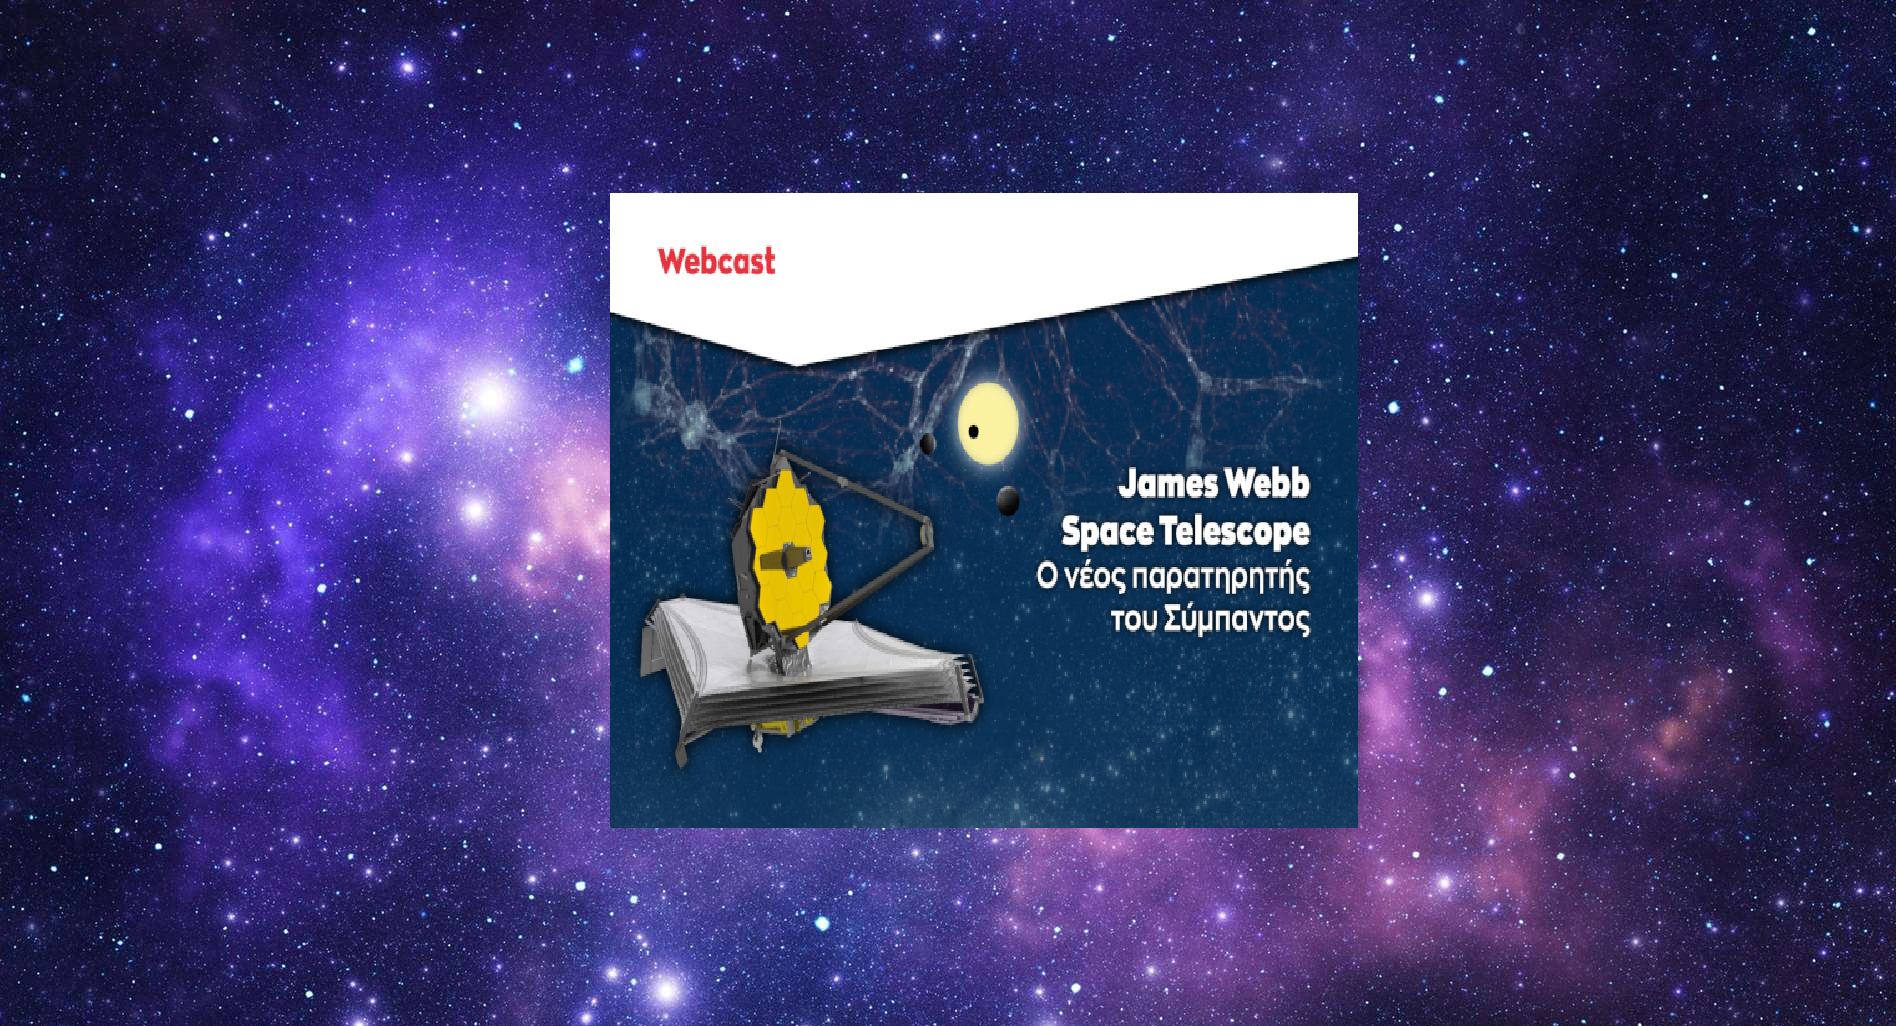 Webcast από το Ίδρυμα Ευγενίδου – “James Webb Space Telescope: Ο νέος παρατηρητής του Σύμπαντος”